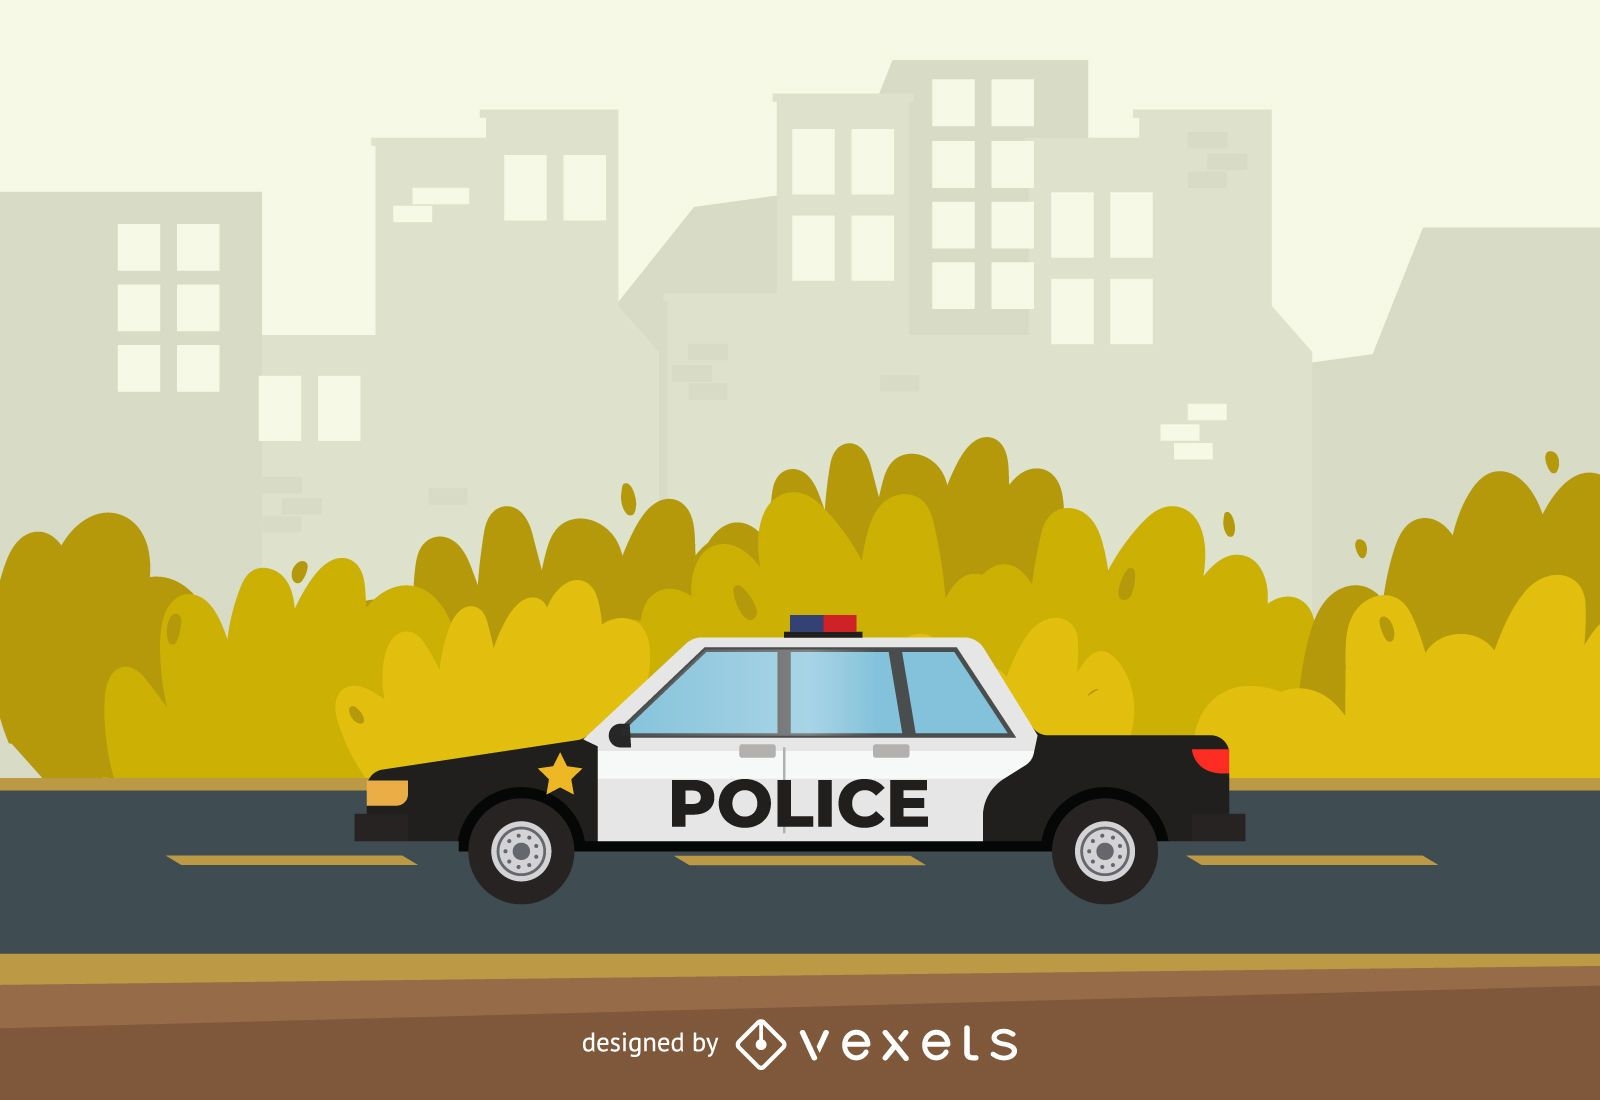 Police Patrol Car Illustration